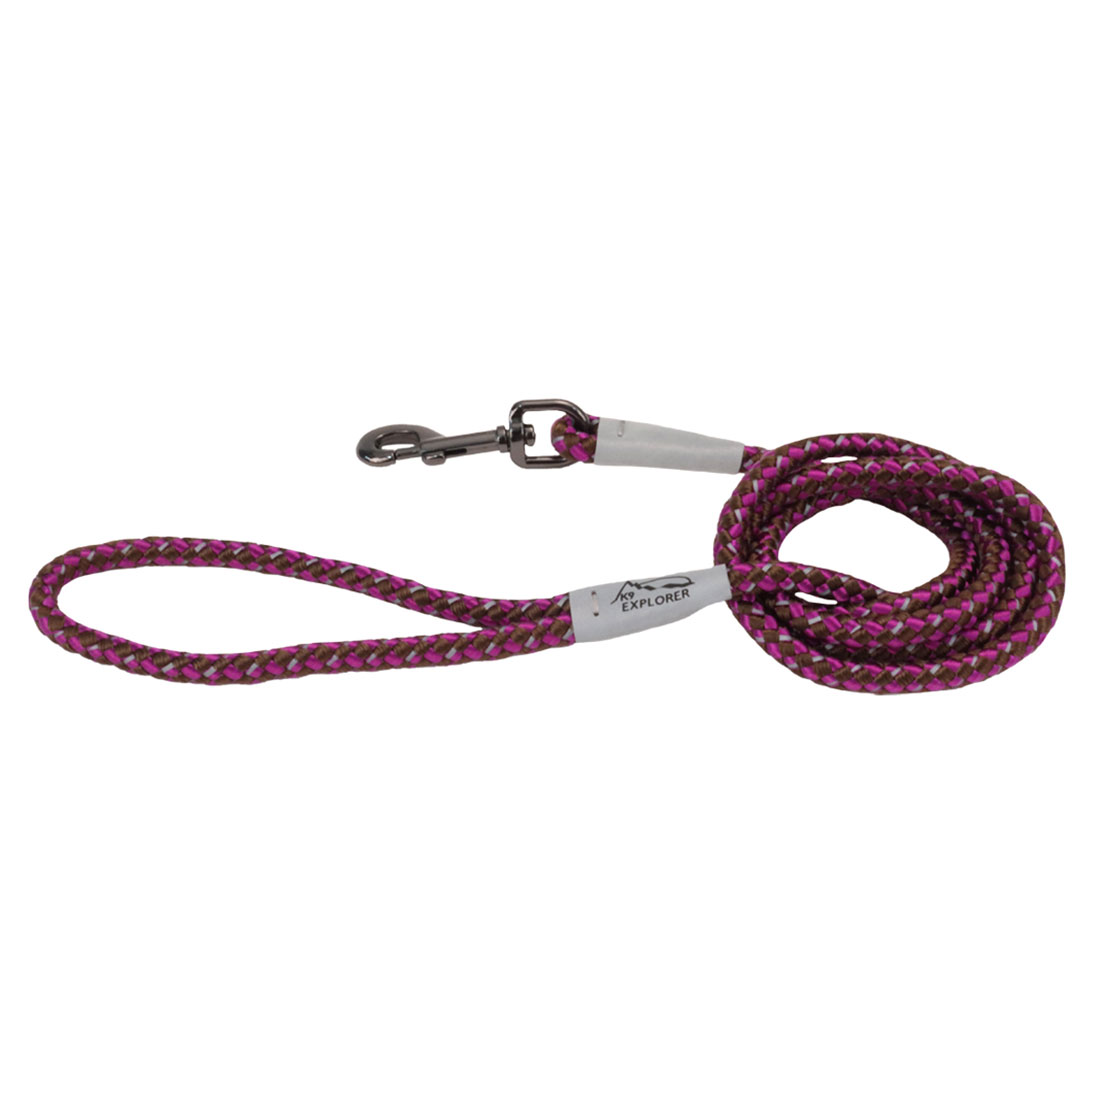 K9 Explorer® Reflective Braided Rope Snap Dog Leash